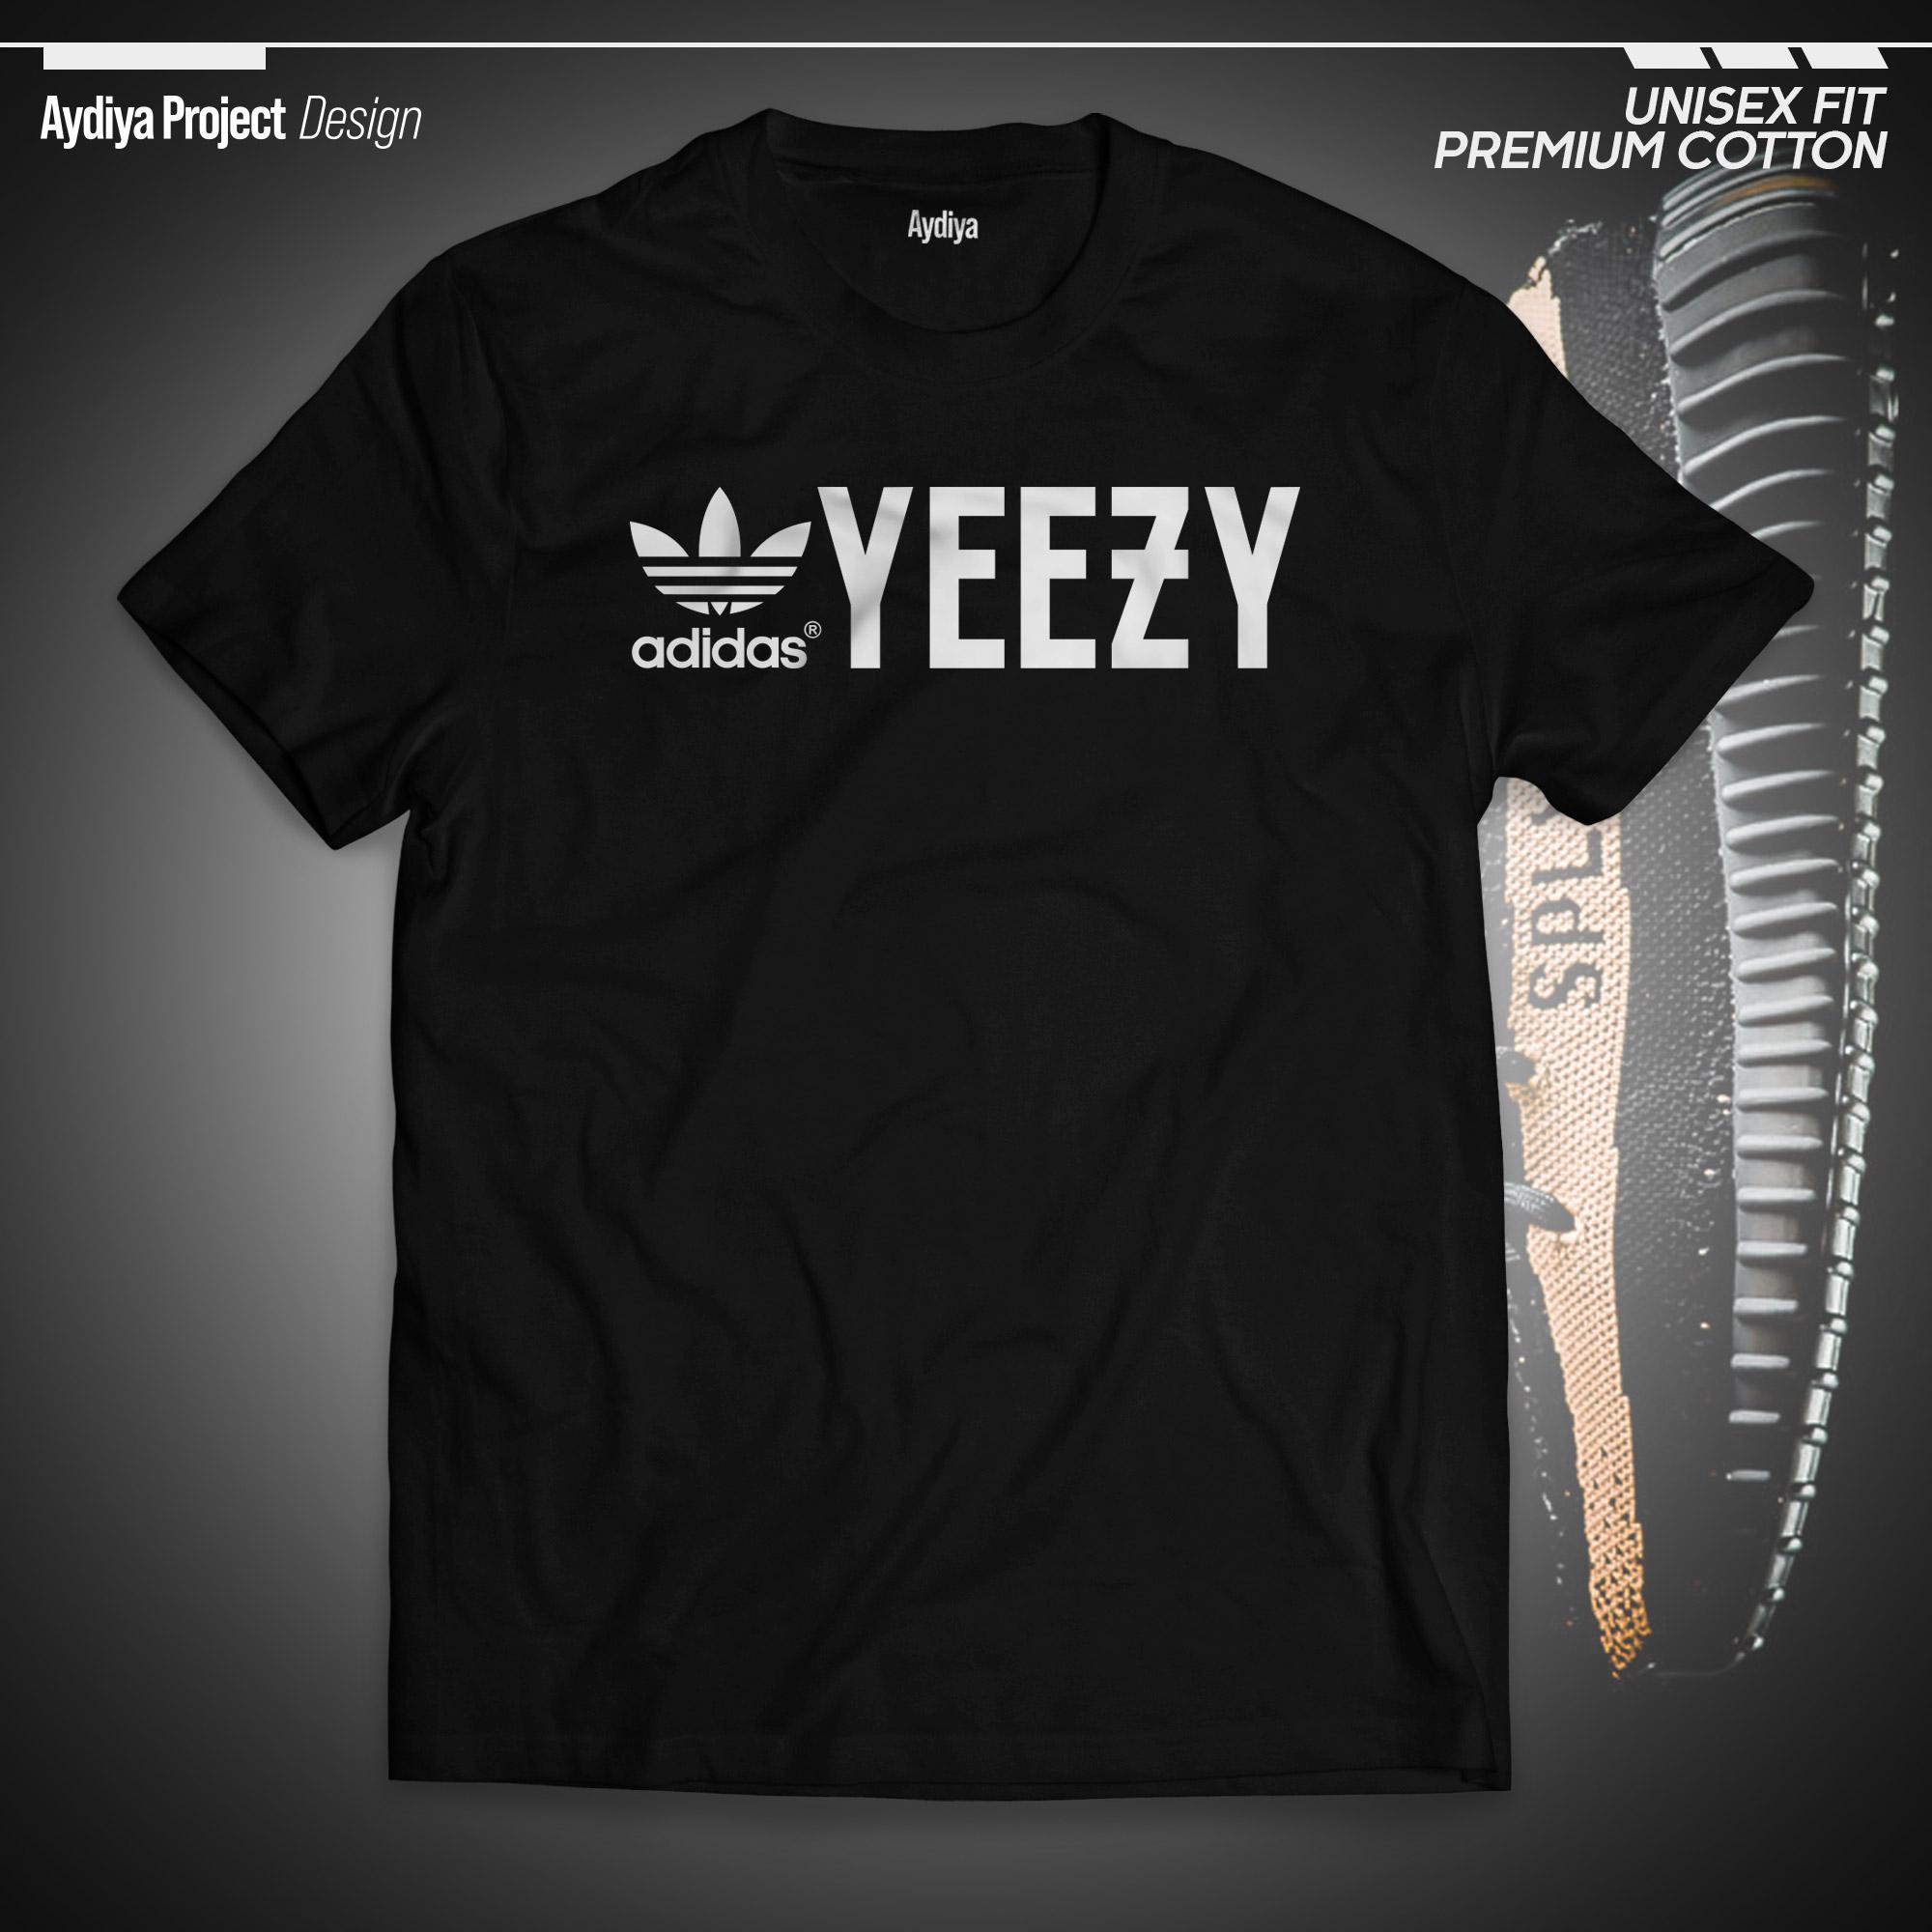 Adidas Yeezy Shirt - HY - Aydiya | Lazada PH